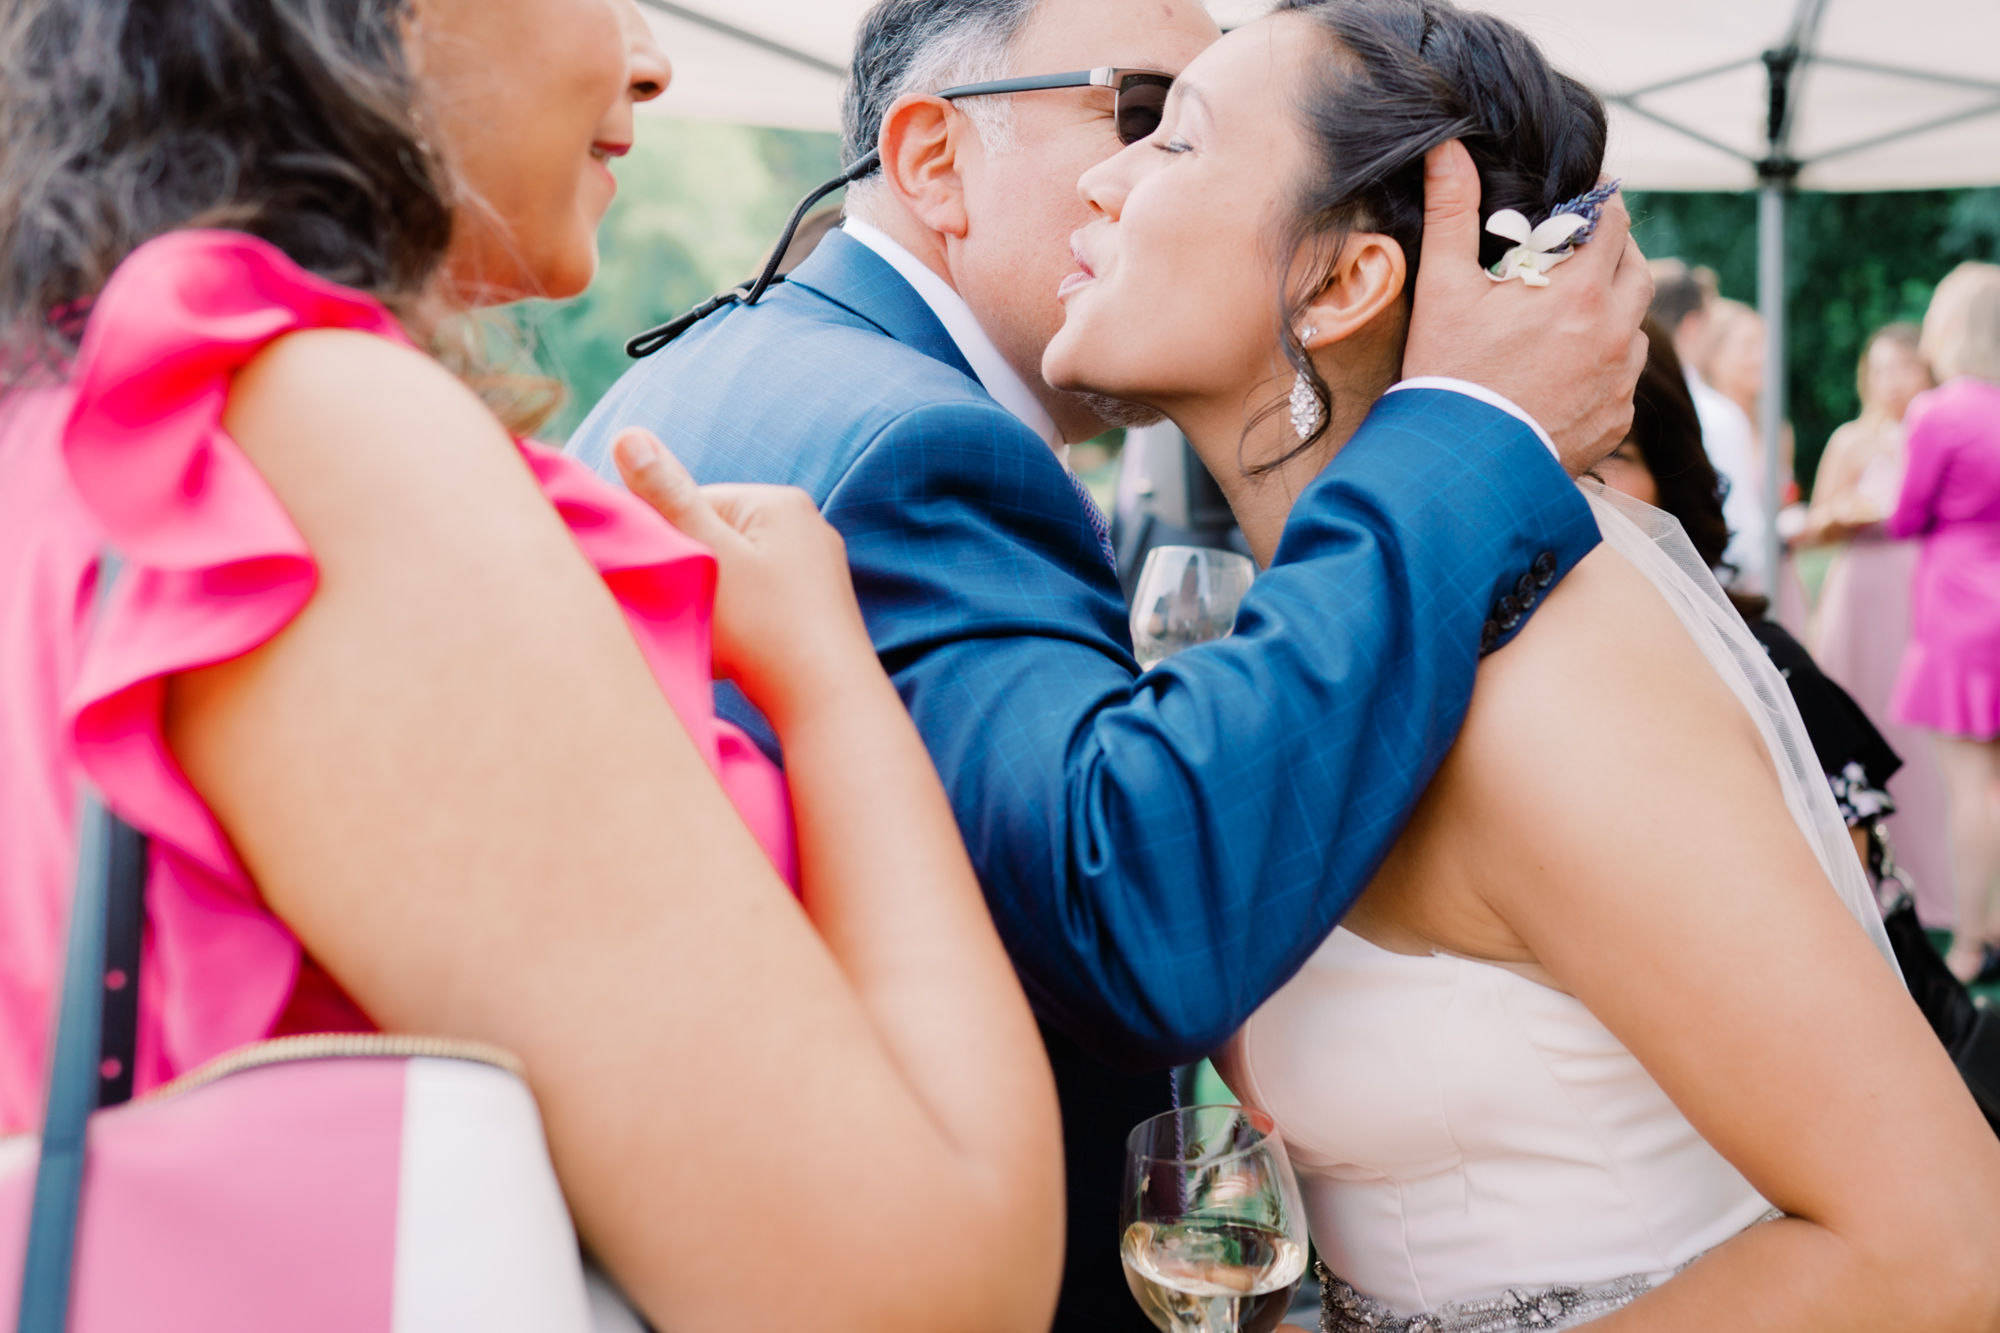 Seattle documentary wedding photographer: Jenn Tai